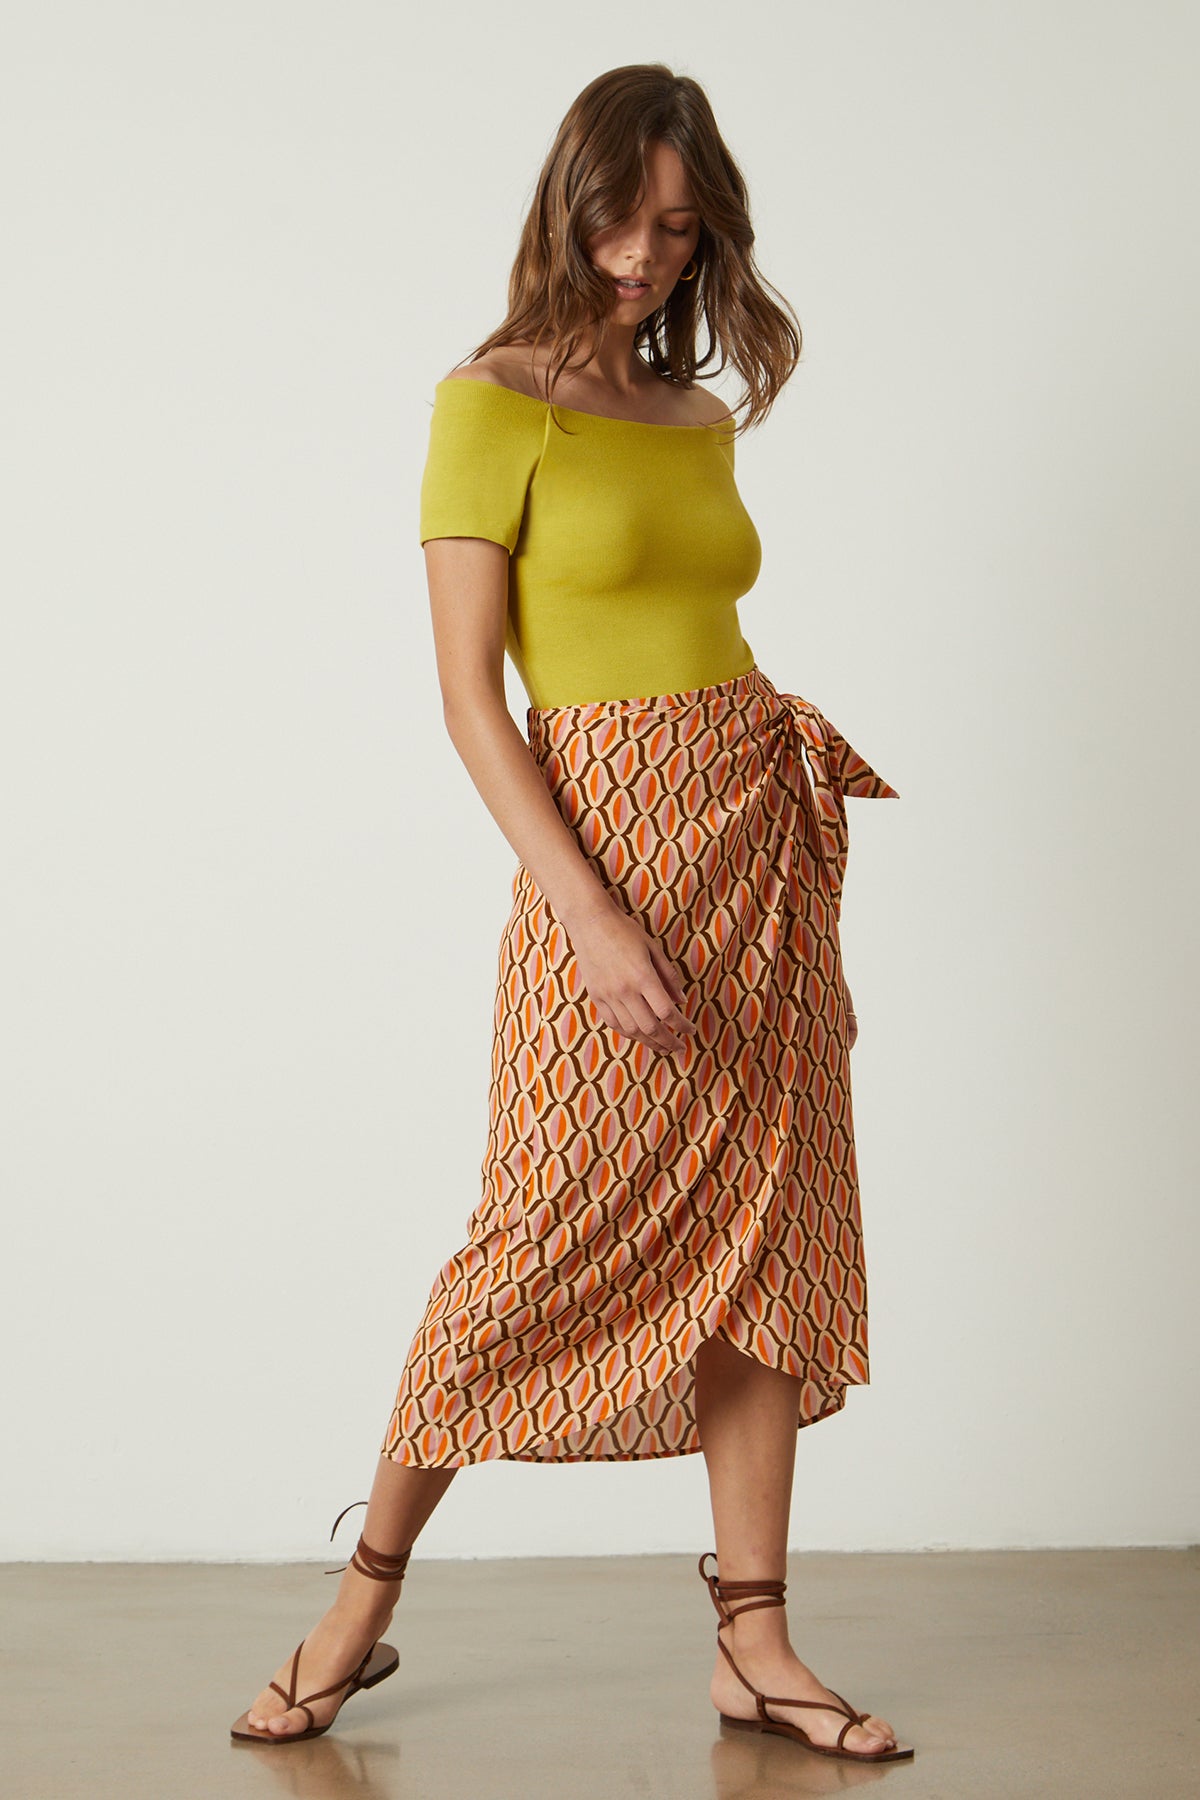   Eloise bodysuit in sundance yellow under Alisha skirt in orange geometric pattern and sandals full length front 